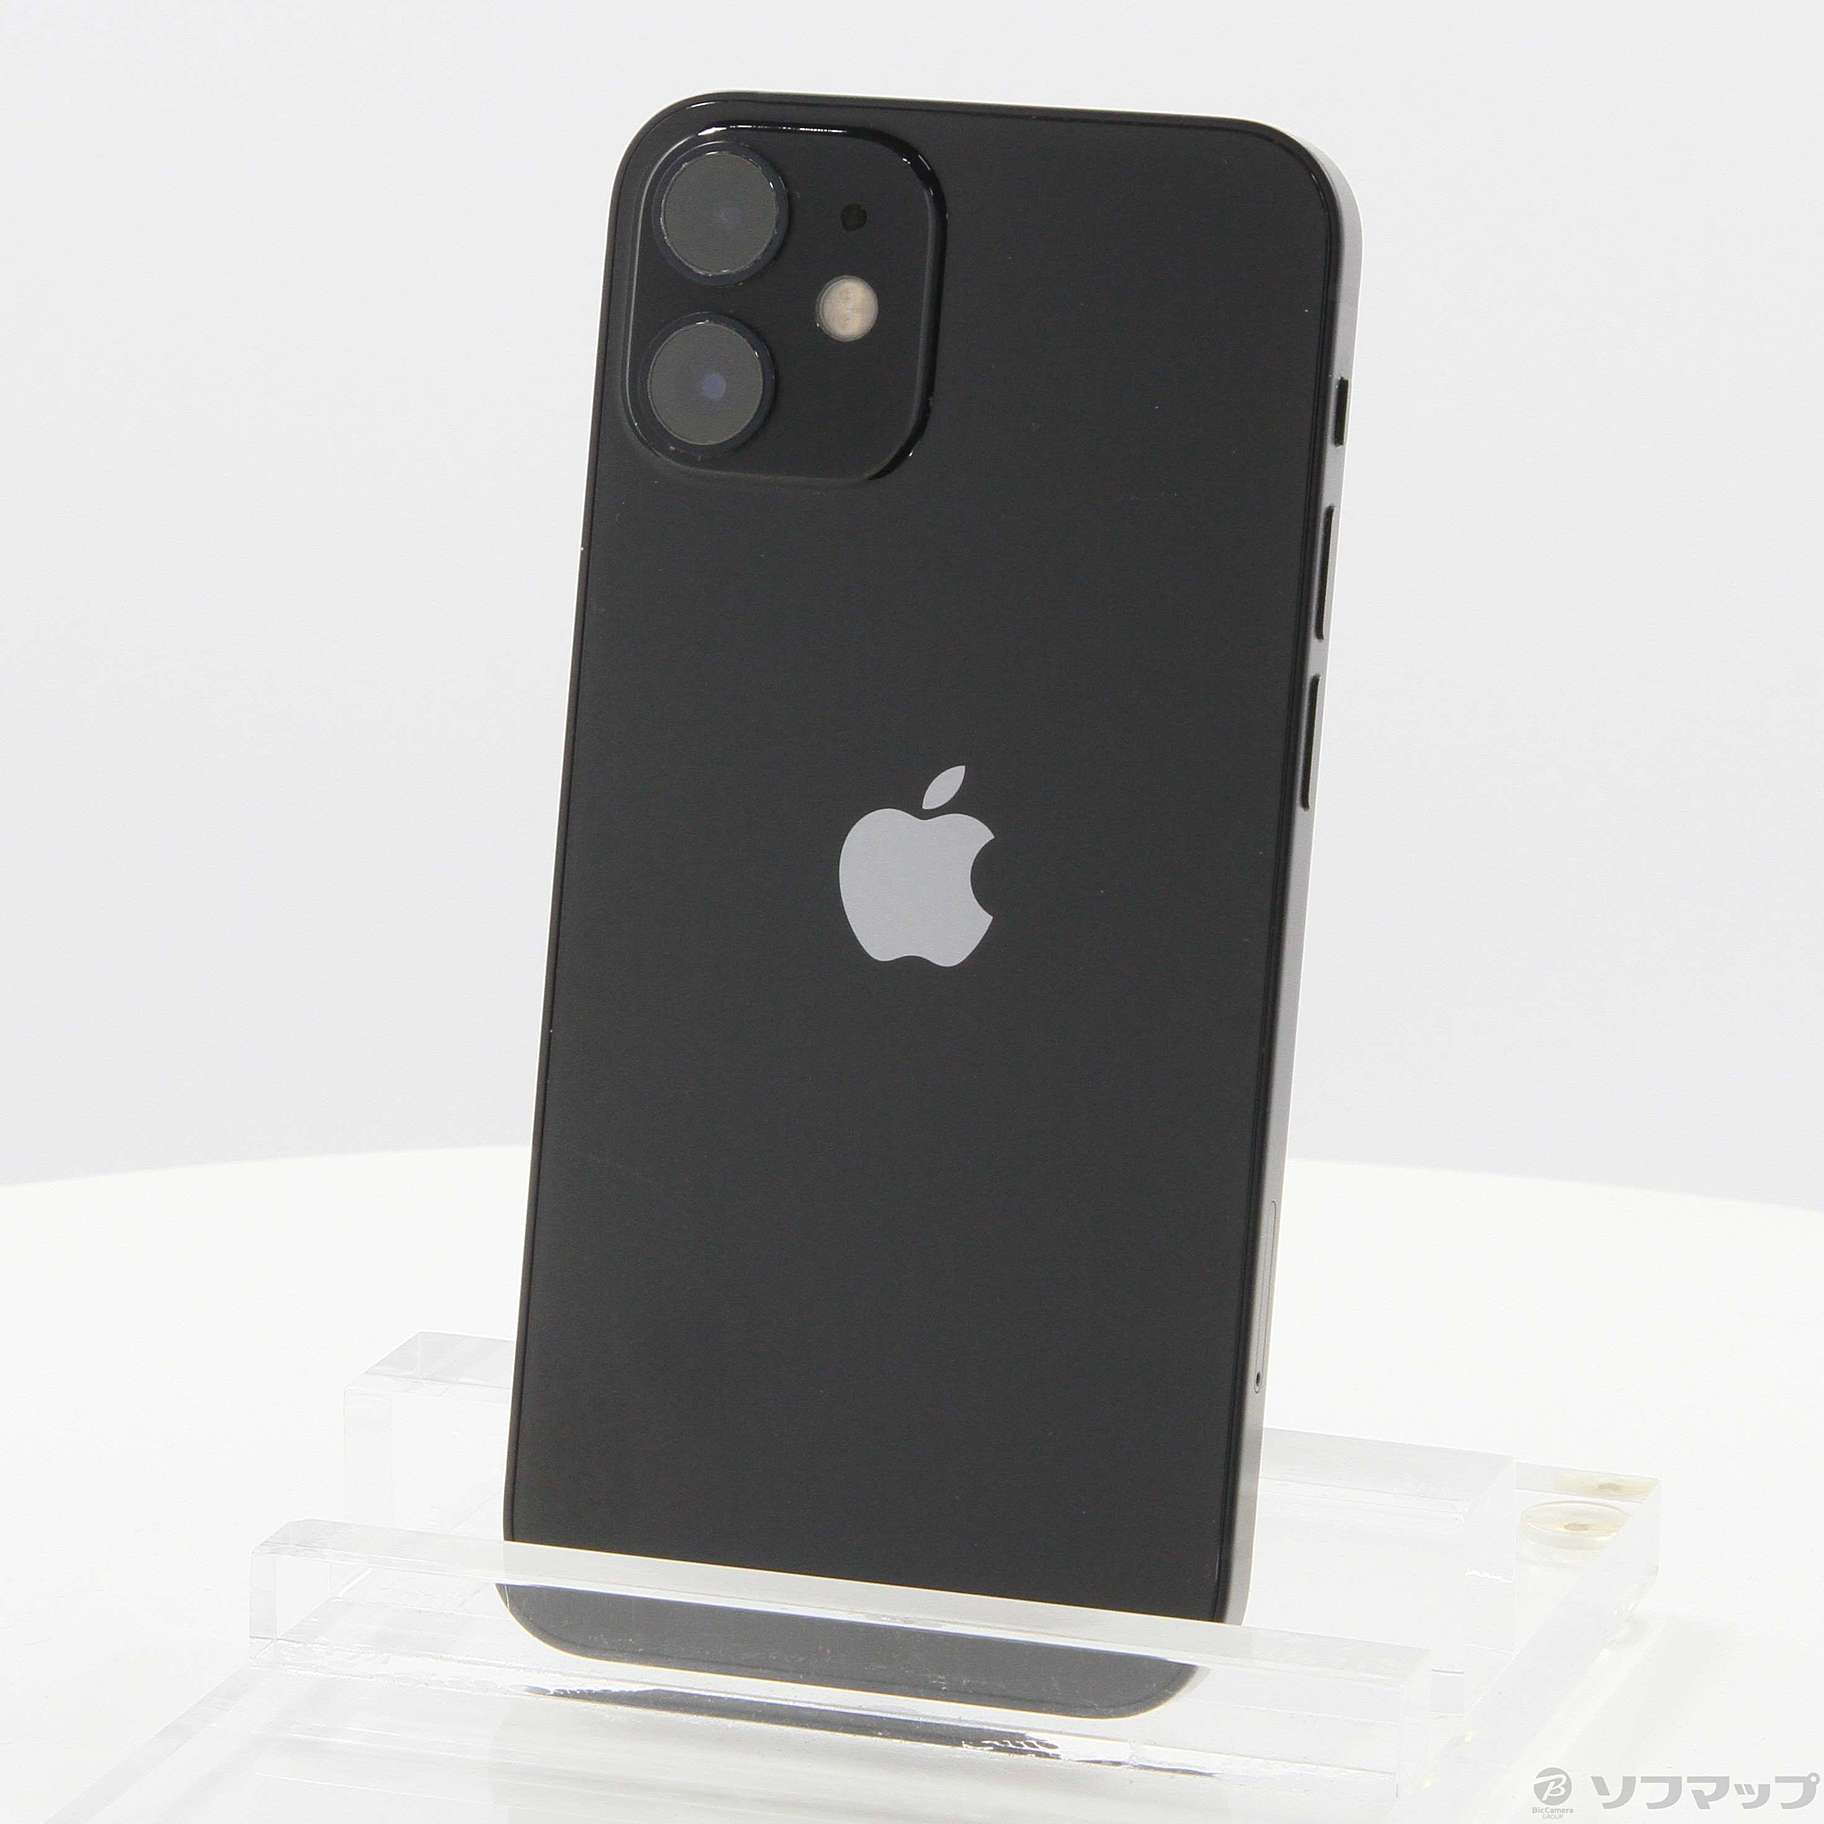 iPhone 12 mini 128GB SIMフリー [ブラック] 中古(白ロム)価格比較 - 価格.com